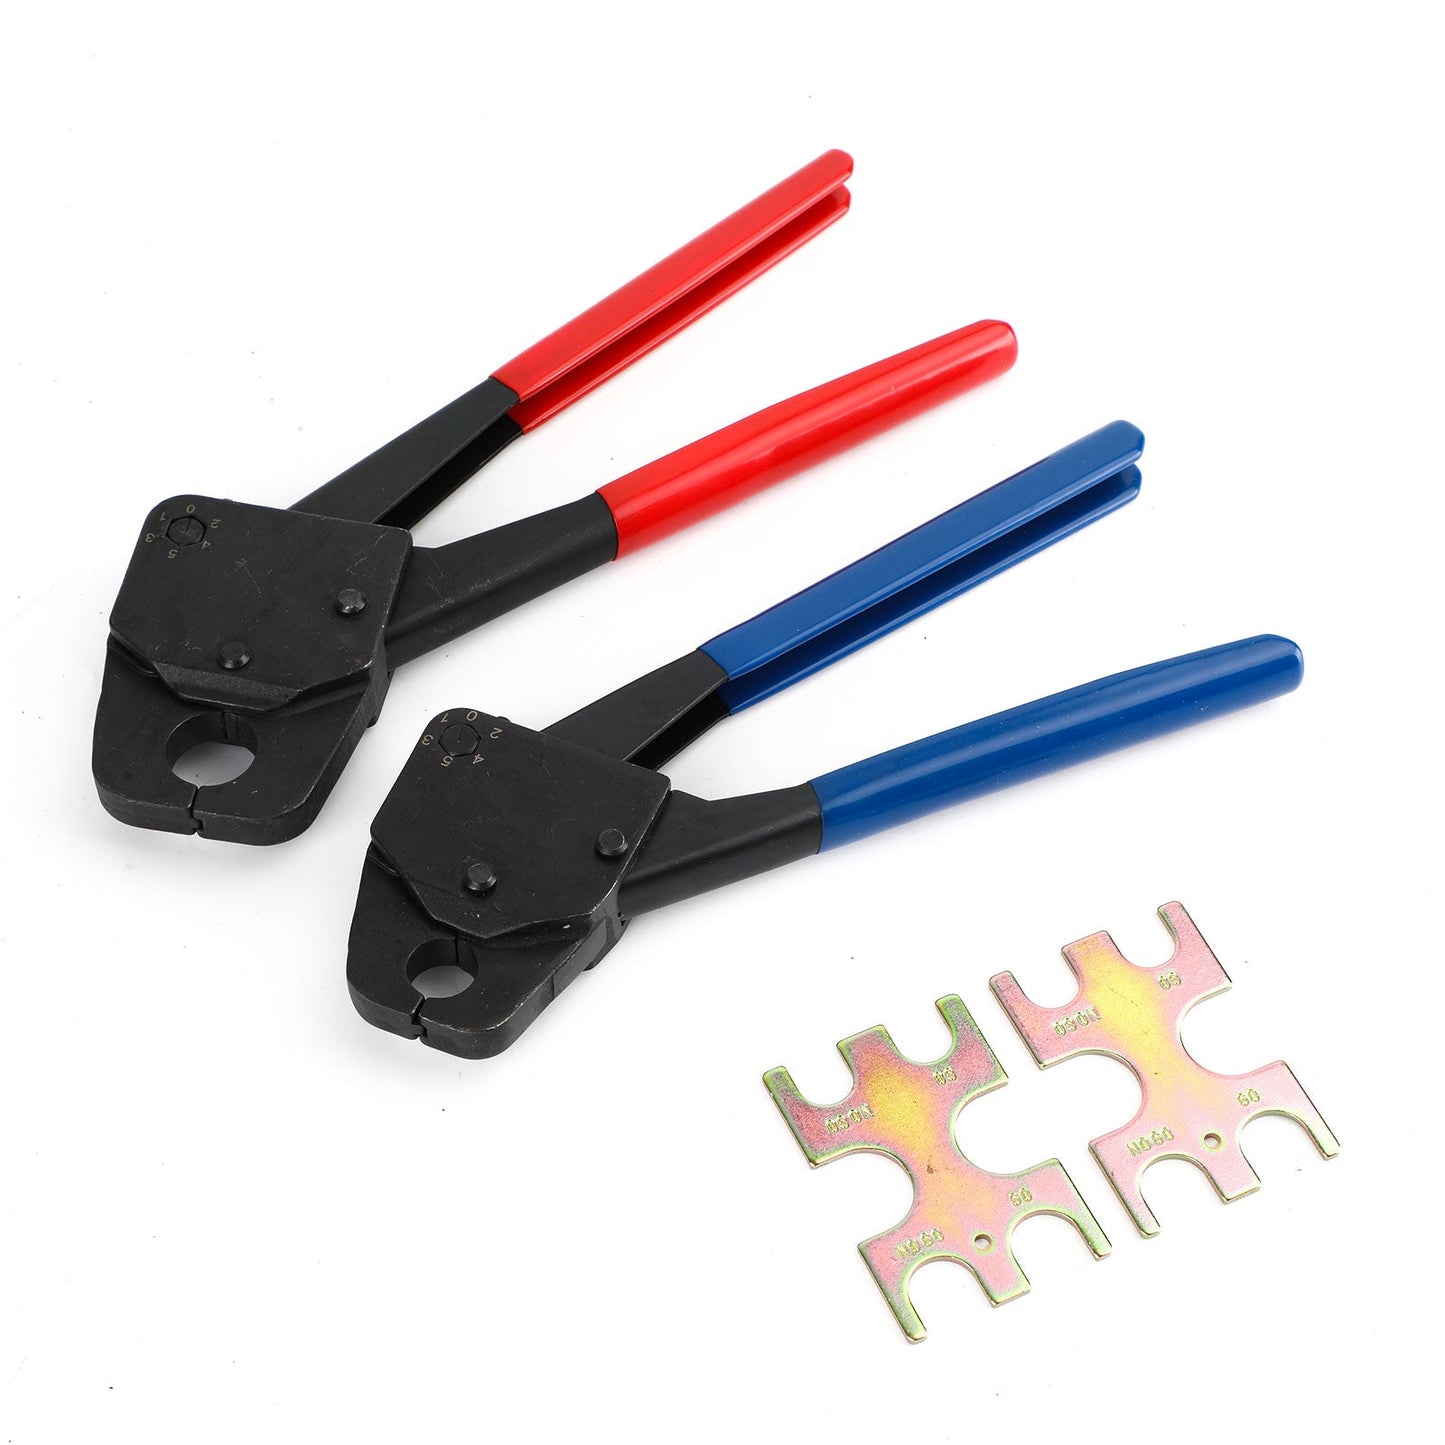 2 Pex Crimper 1/2" And 3/4" Plumbing Crimping Gonogo Set Angle Gauge Tools Combo